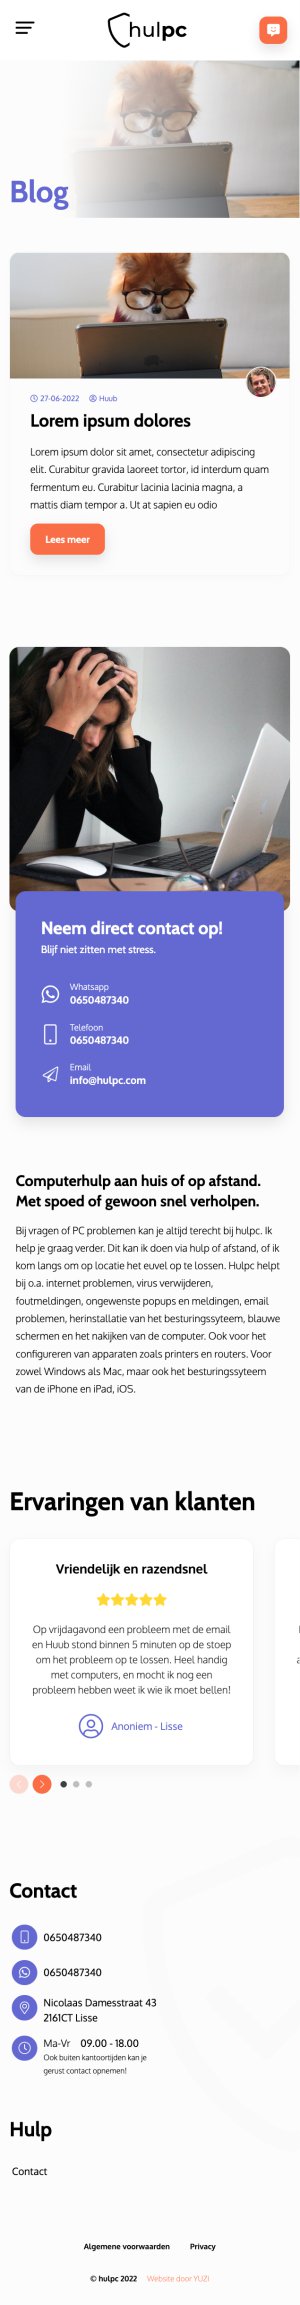 Website Hulpc